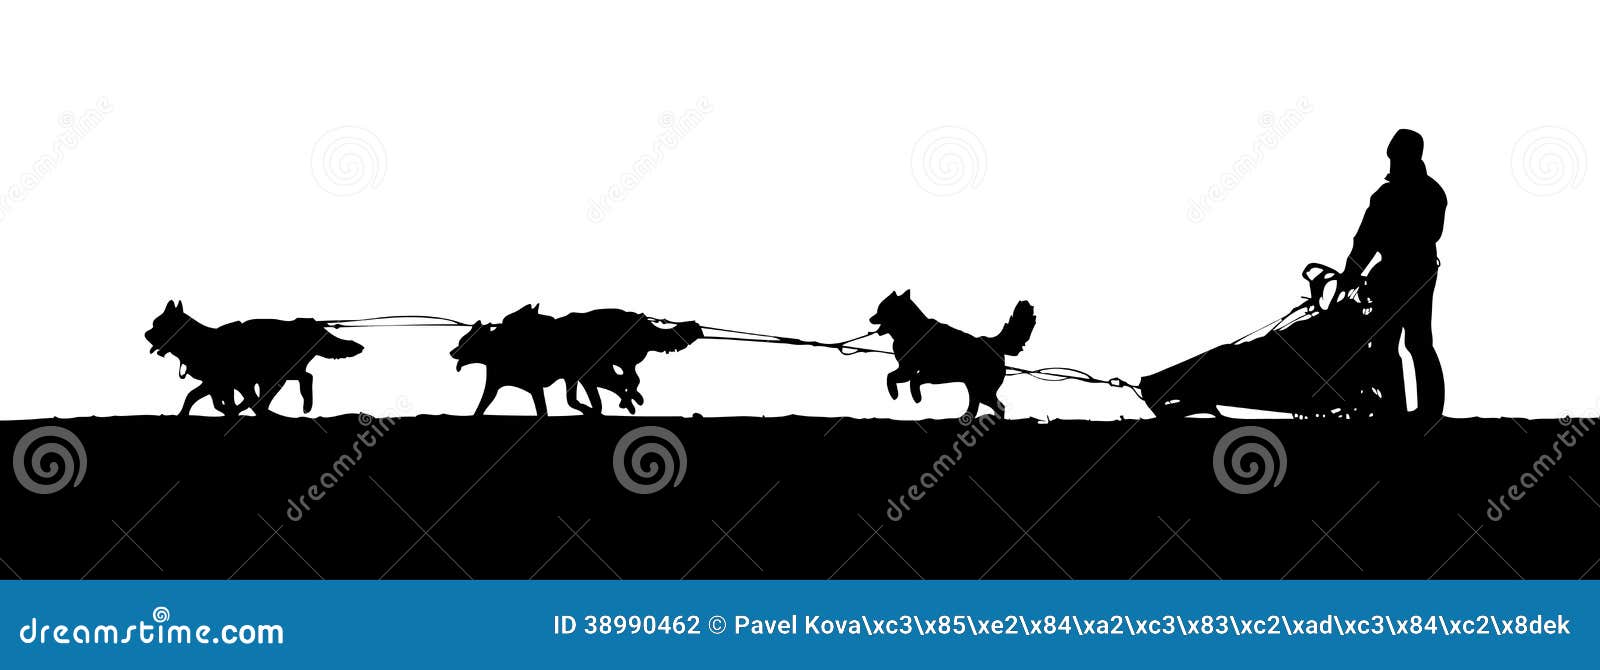 dog sled team clip art - photo #17